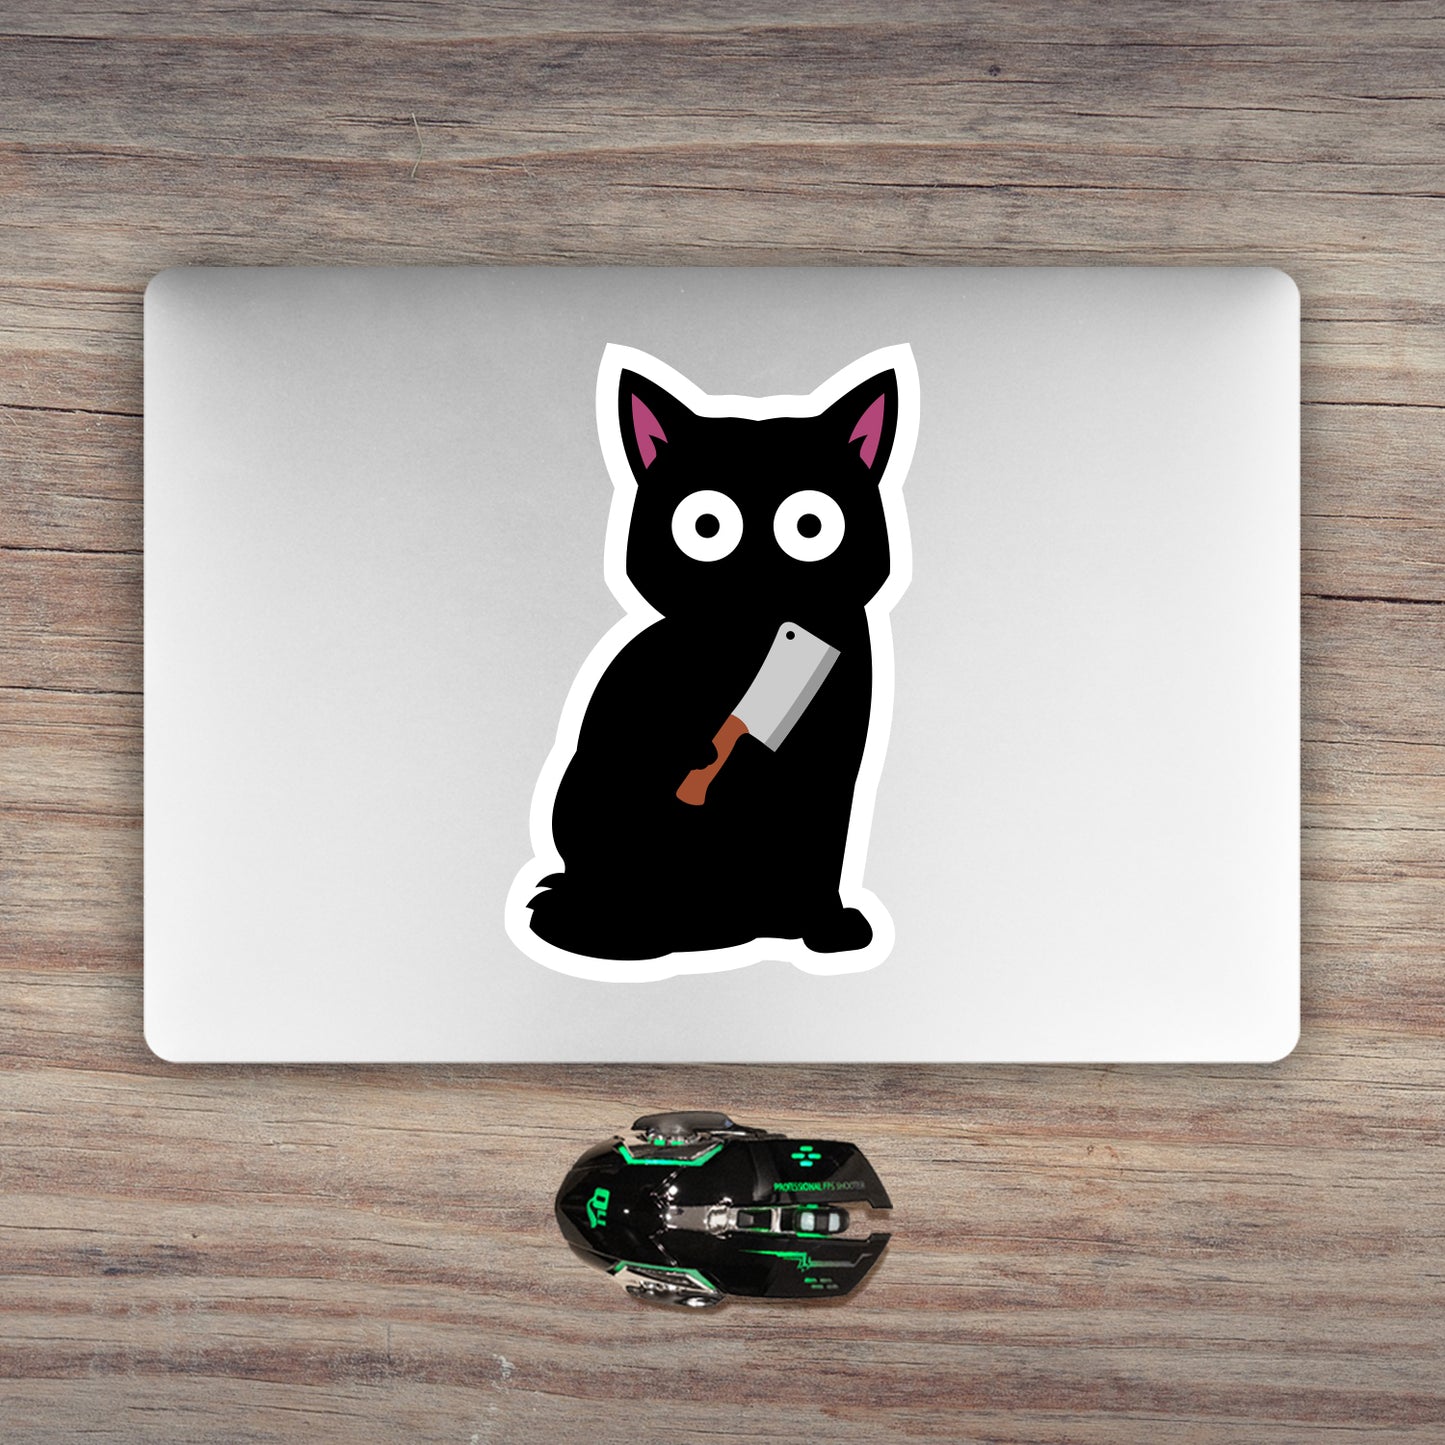 Chibi Black Cat With Meat Cleaver Sticker